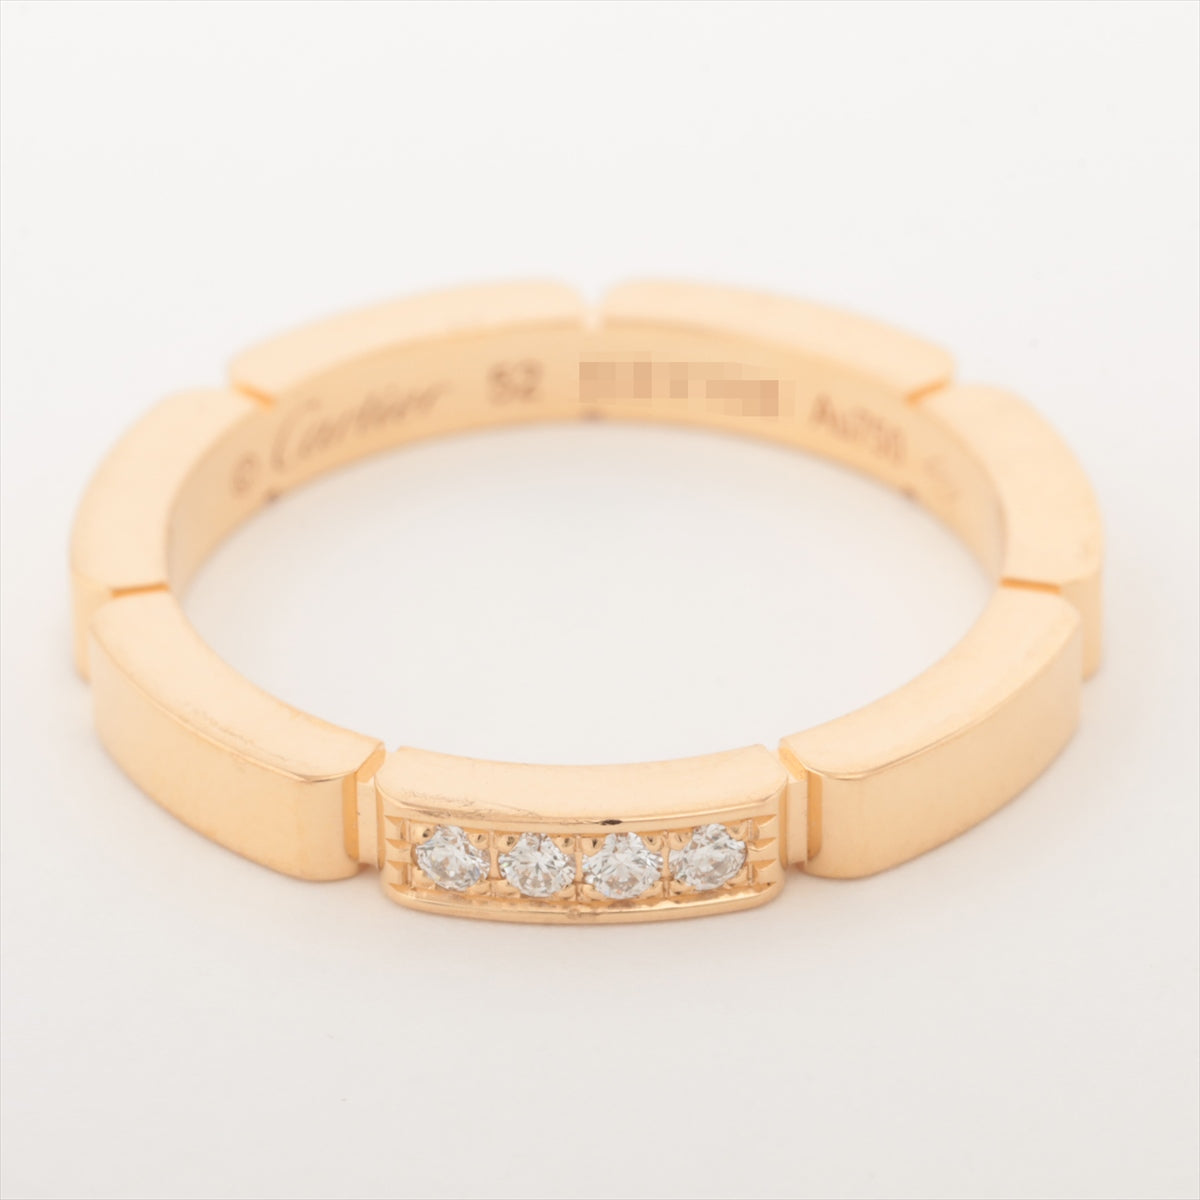 Cartier Maillon Panthère 4P diamond rings 750(PG) 4.0g 52